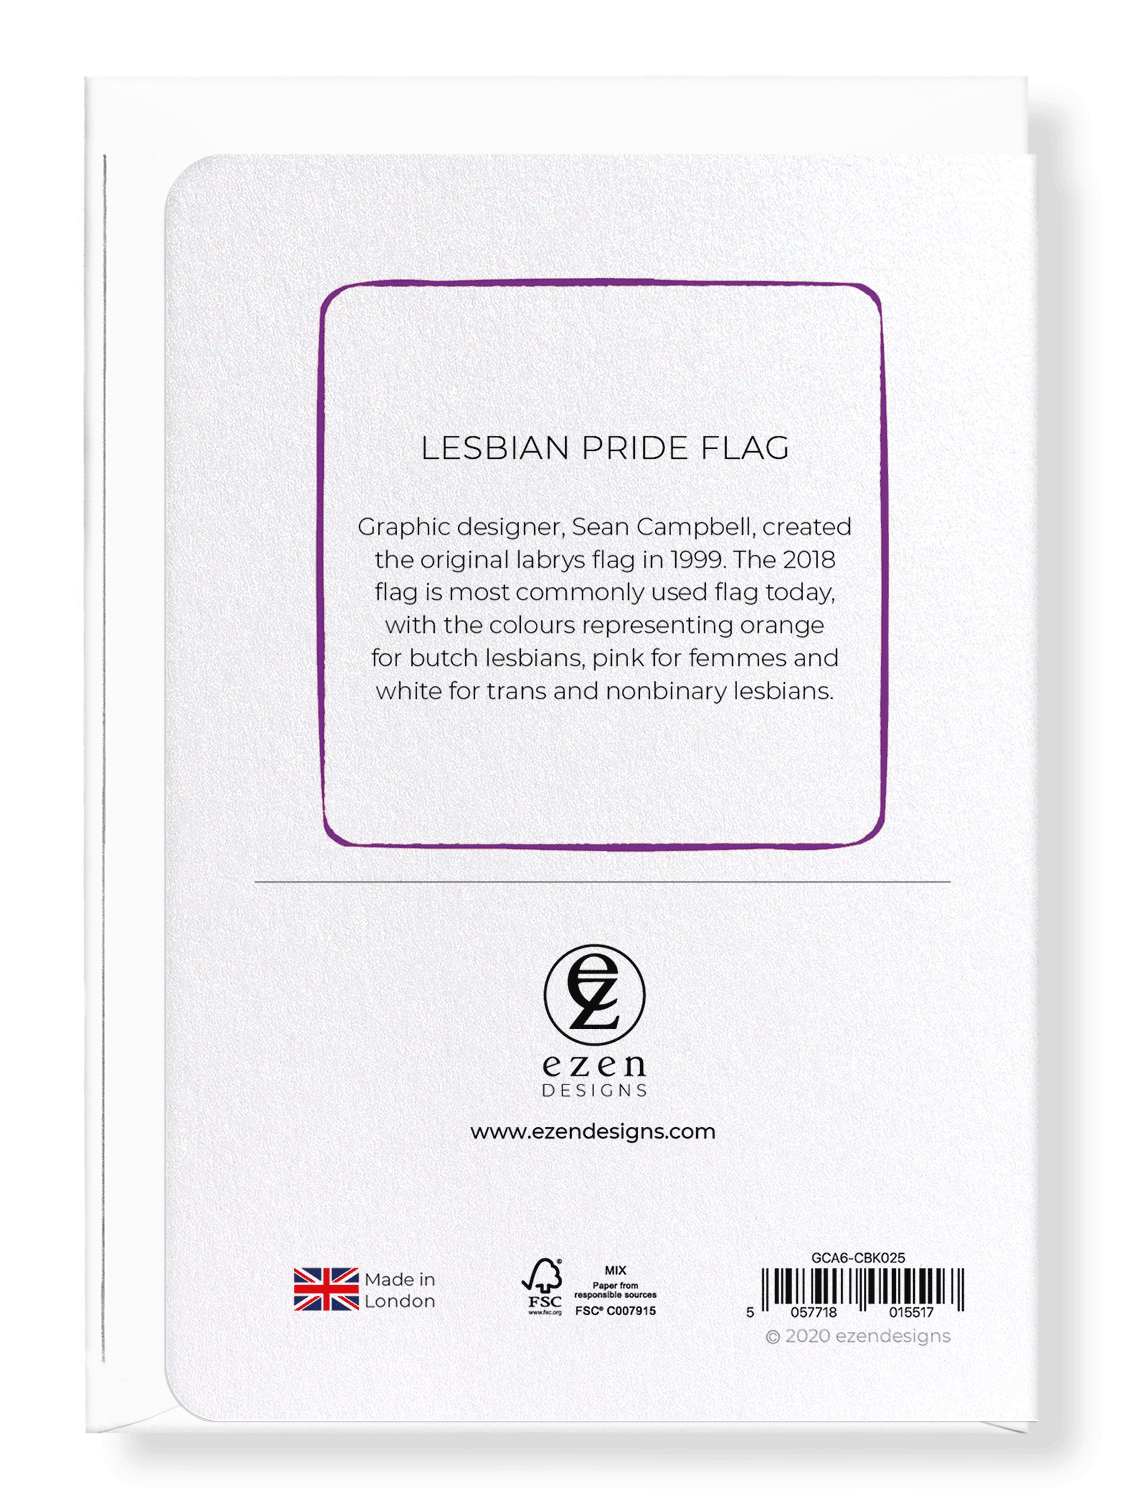 Ezen Designs - Lesbian pride flag - Greeting Card - Back